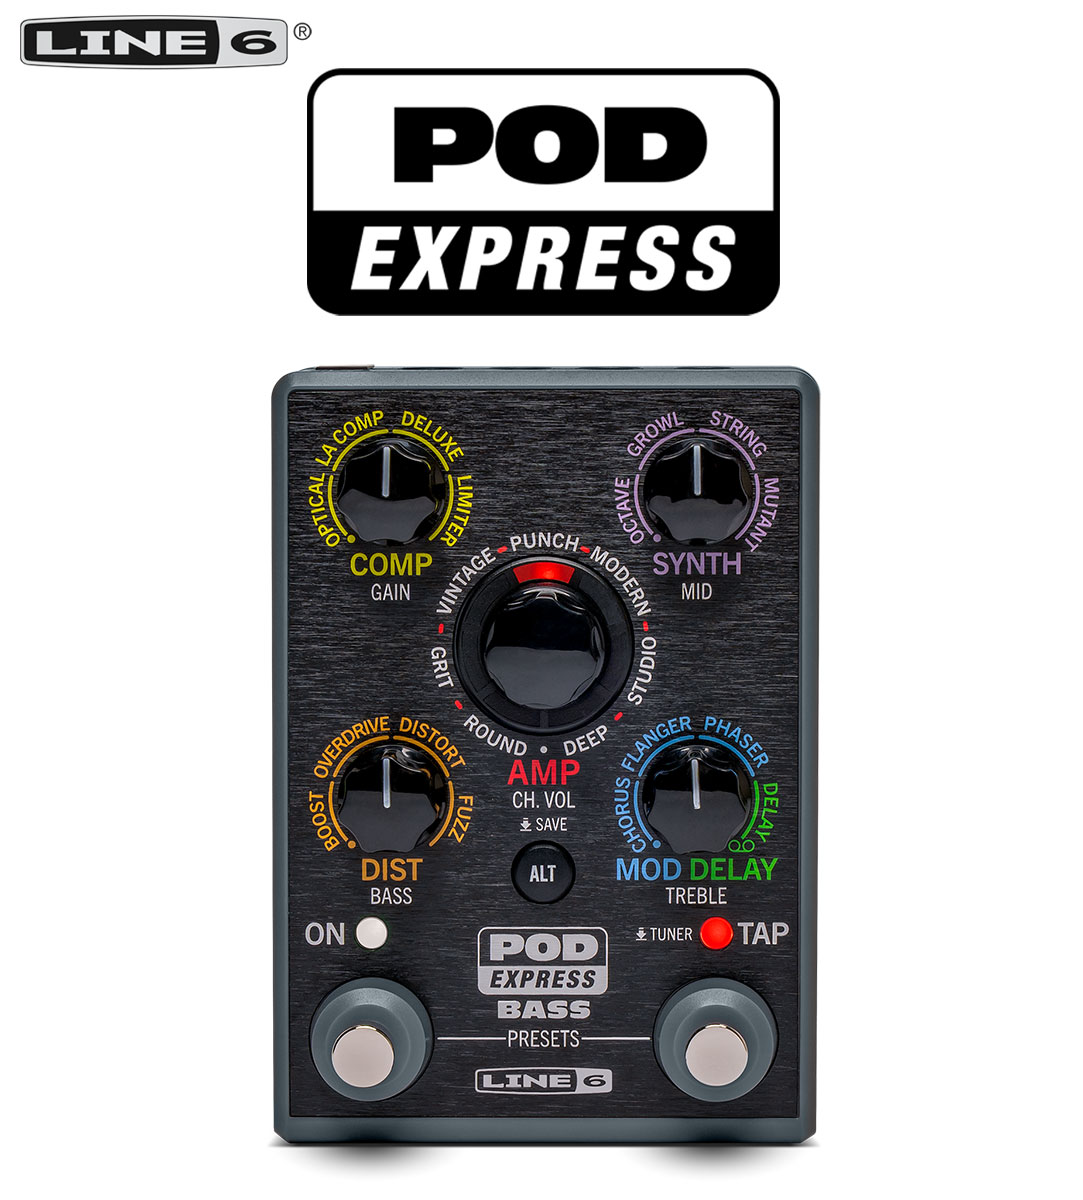 LINE6/POD Express Bass ライン6 マルチエフェクター